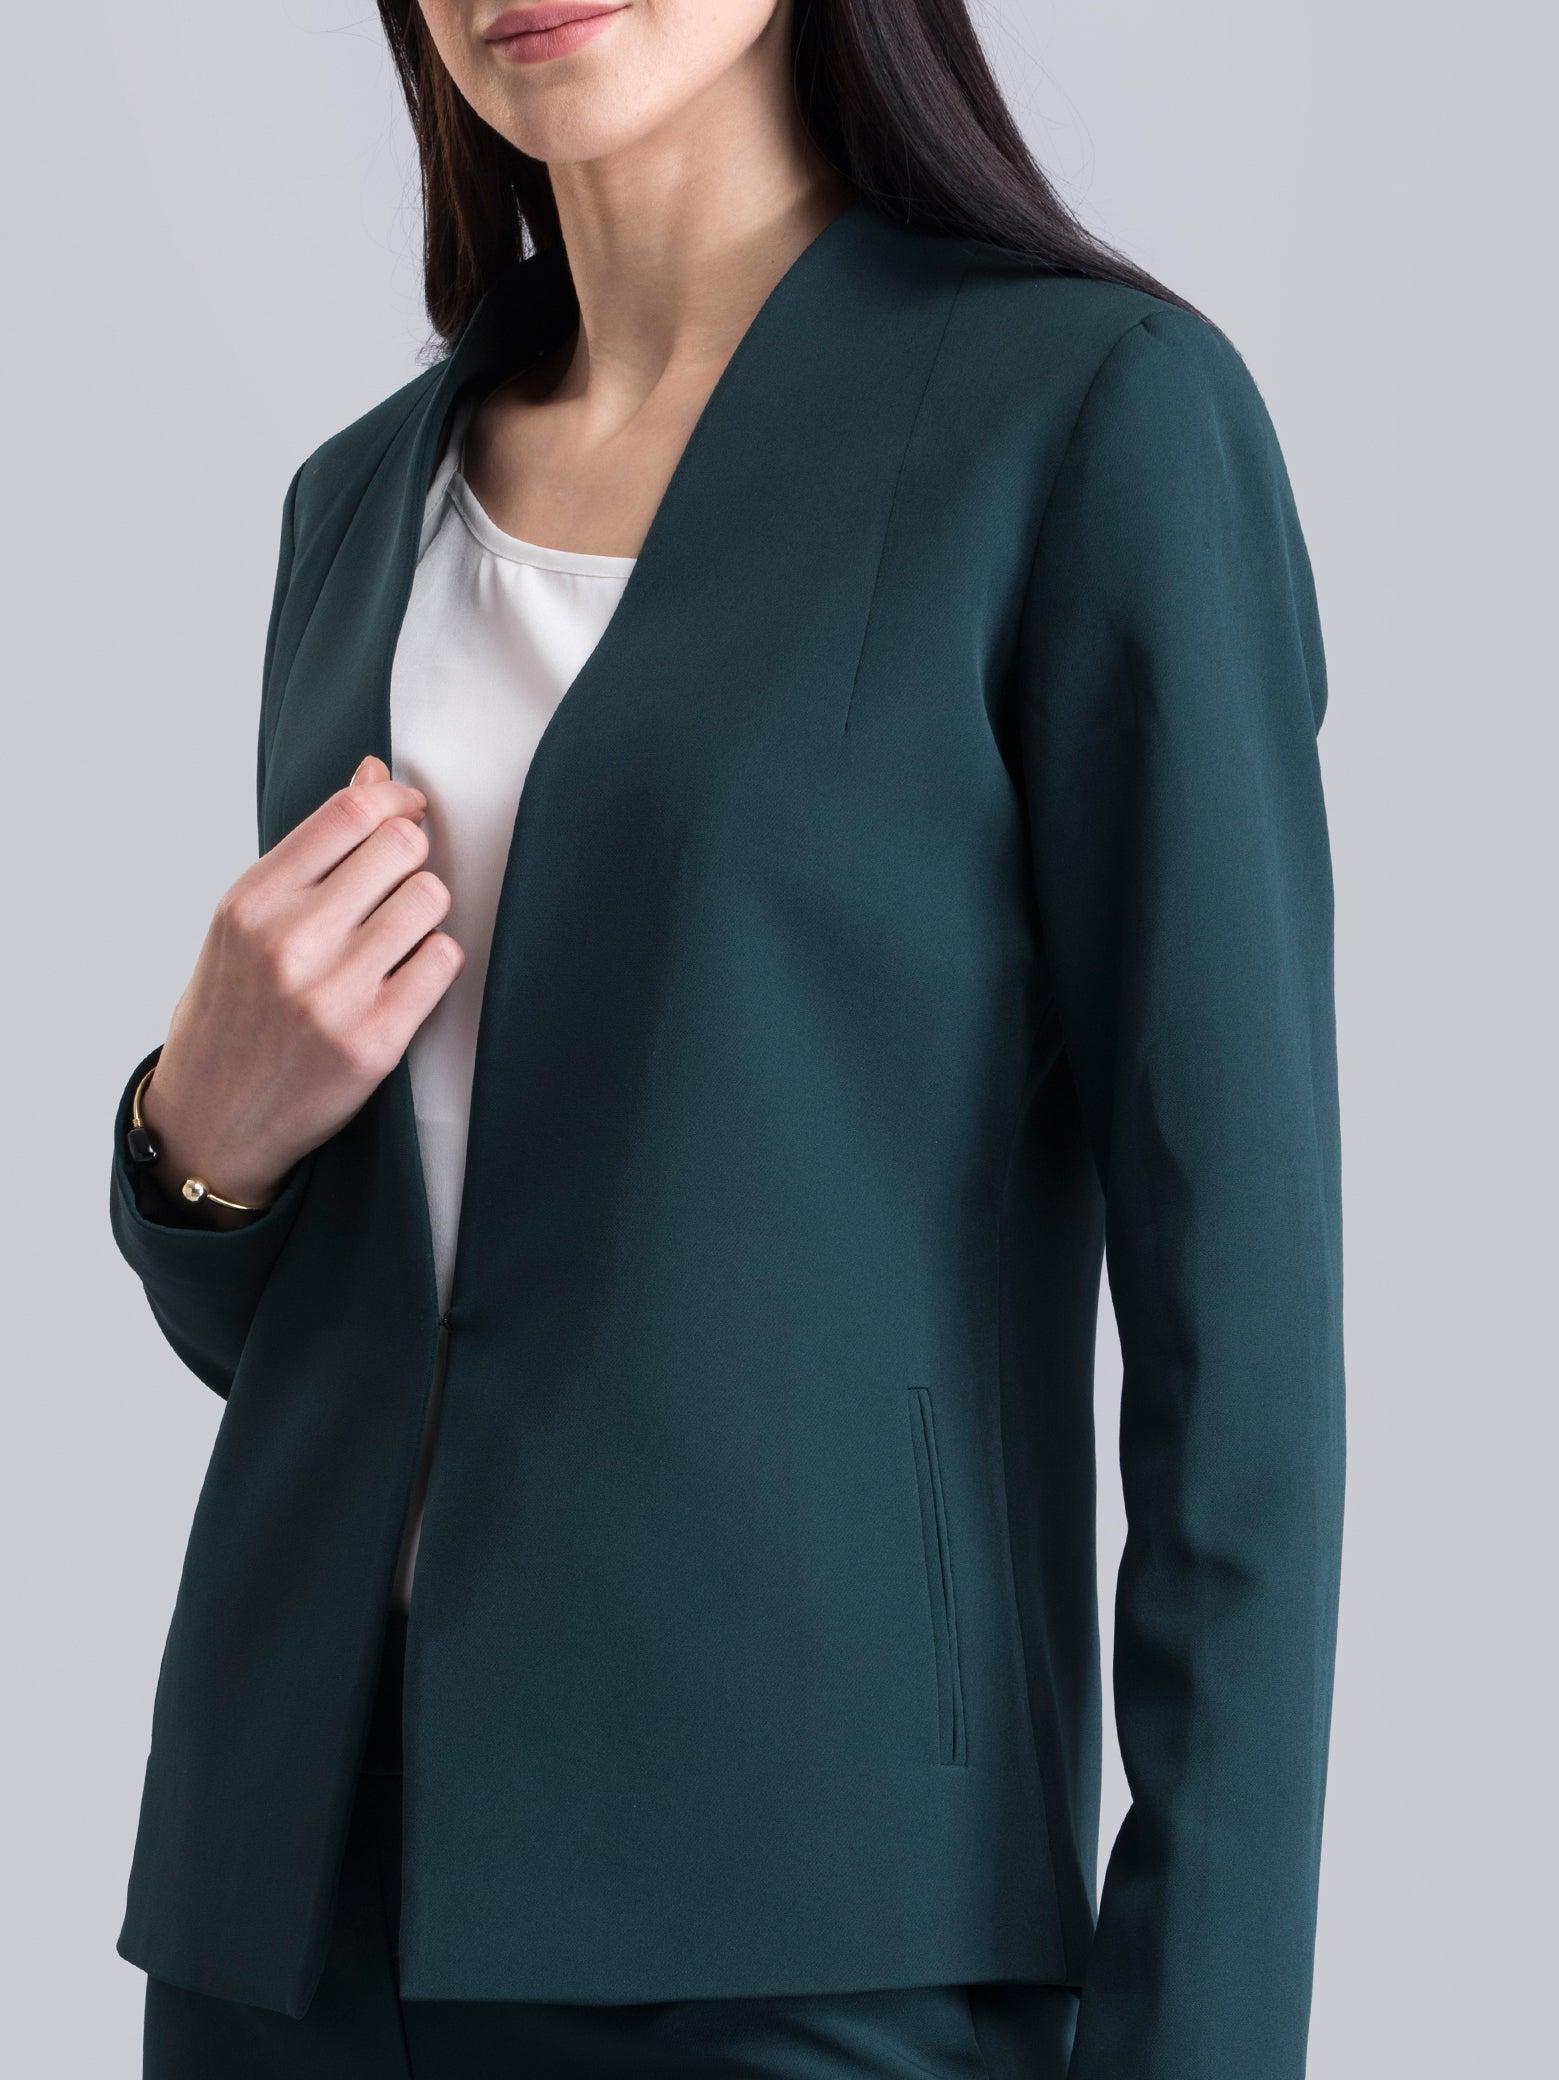 Stylish Hook Closure Jacket - Green| Formal Jackets